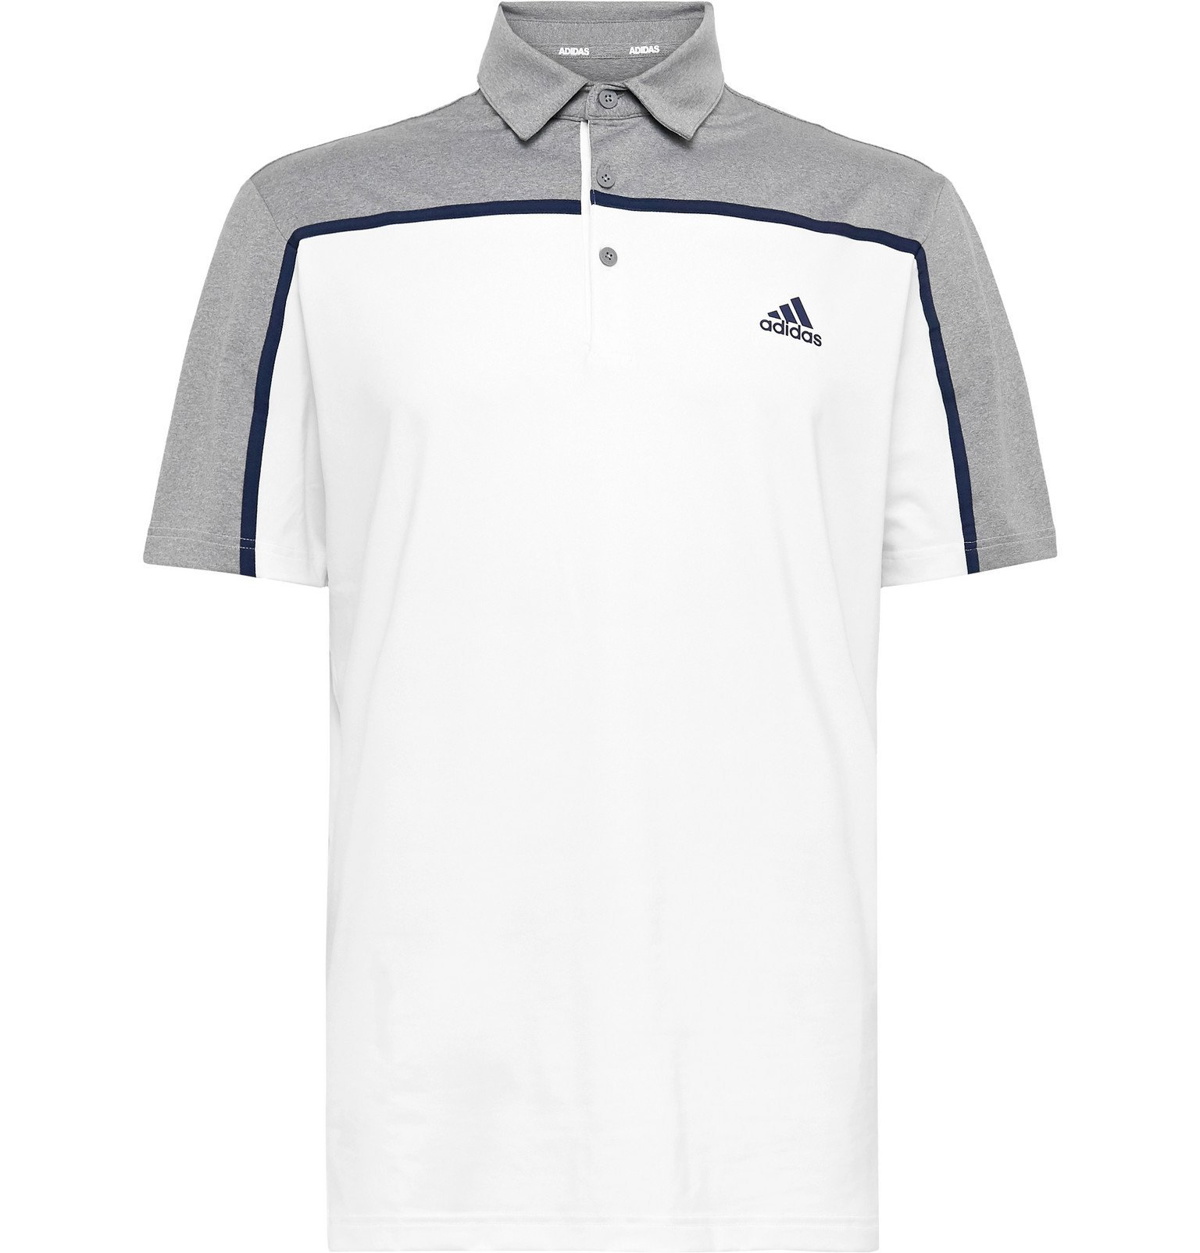 Golf - Ultimate 365 Stretch-Jersey Golf Shirt - White adidas Golf